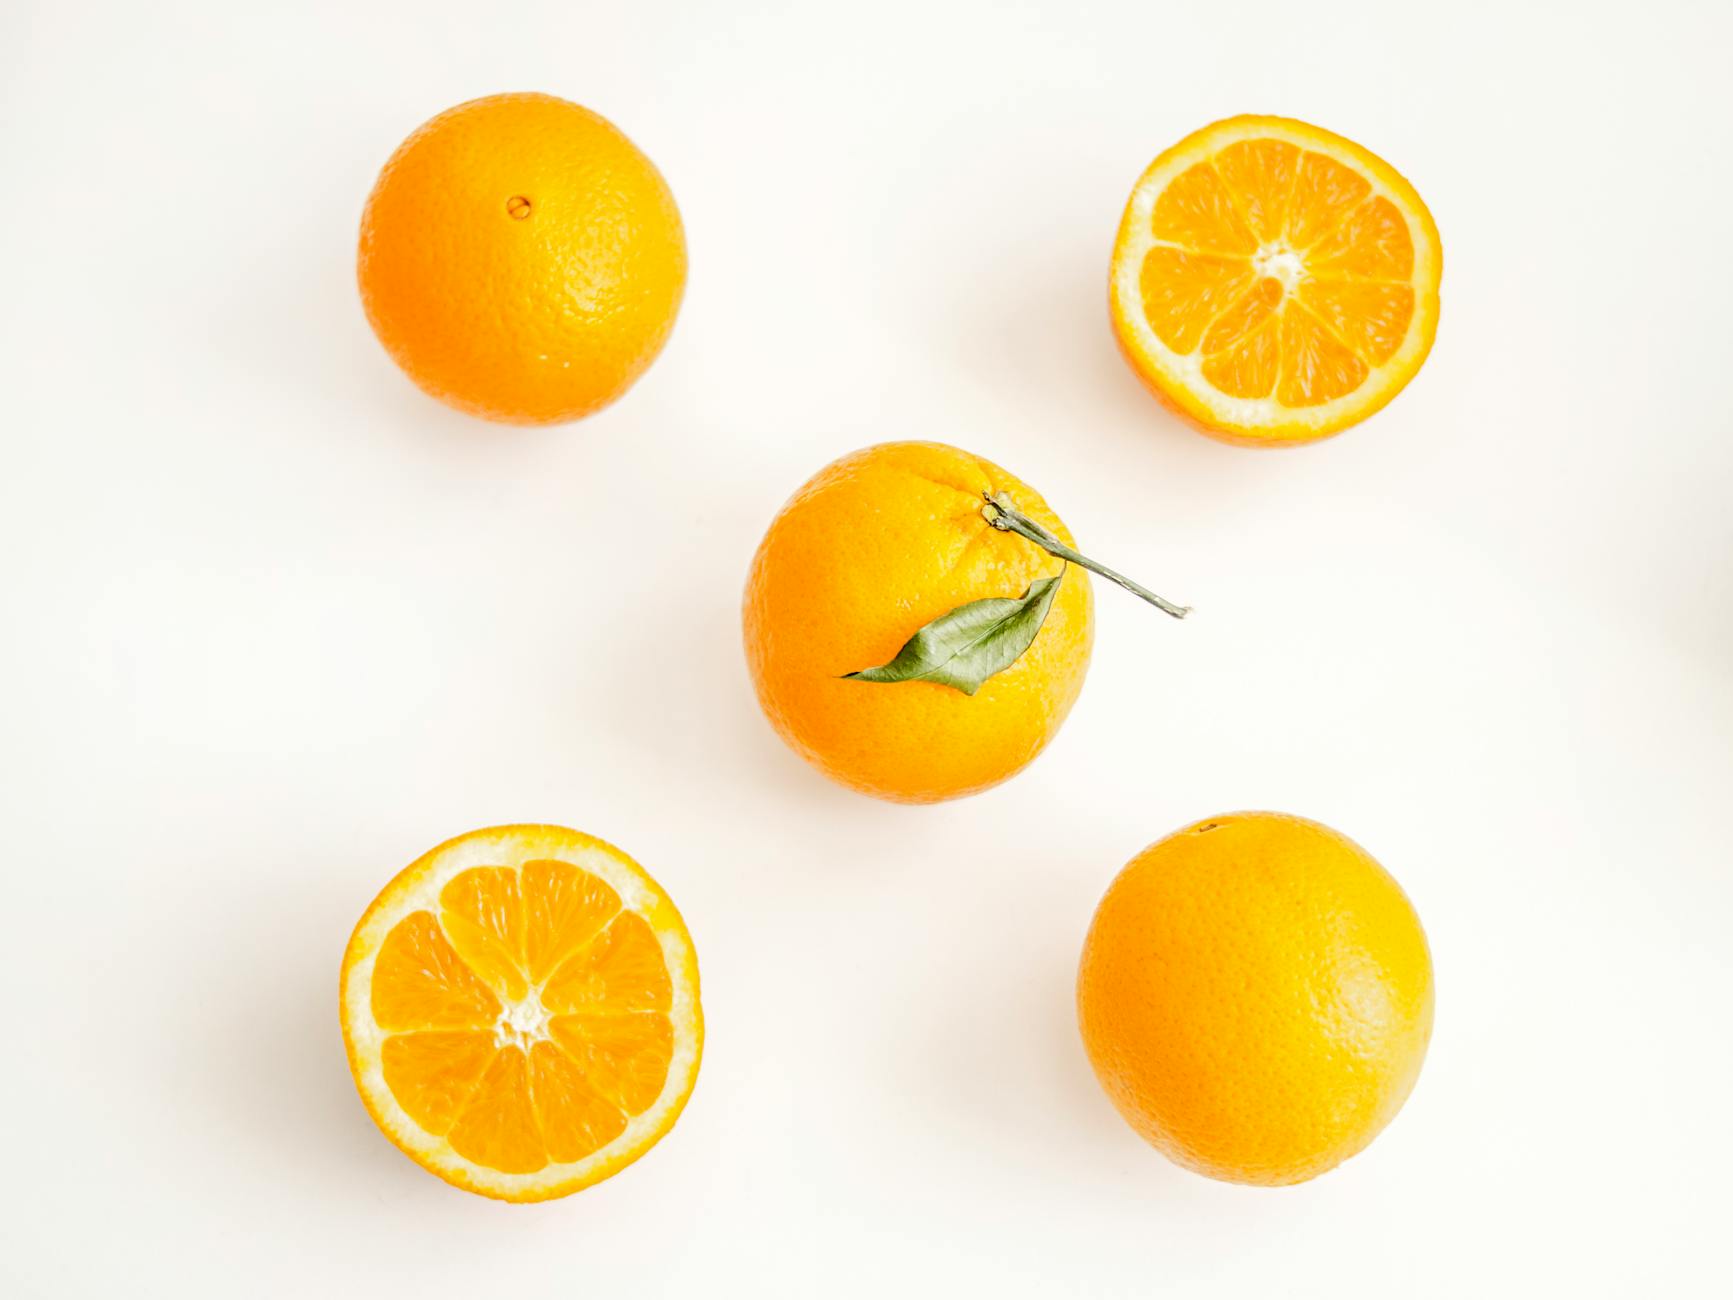 Oranges On White Surface · Free Stock Photo